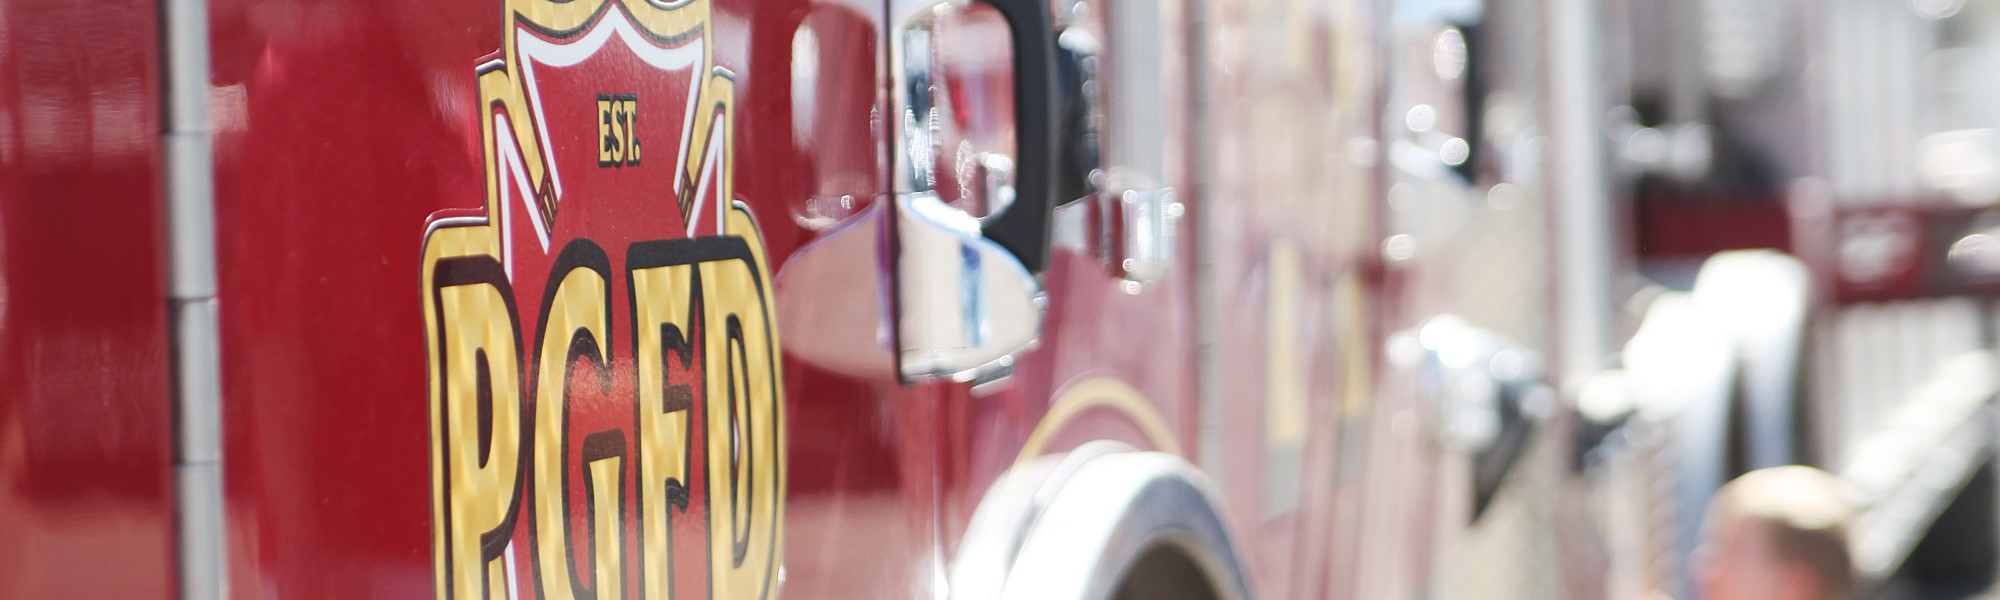 close up shot of a fire engine